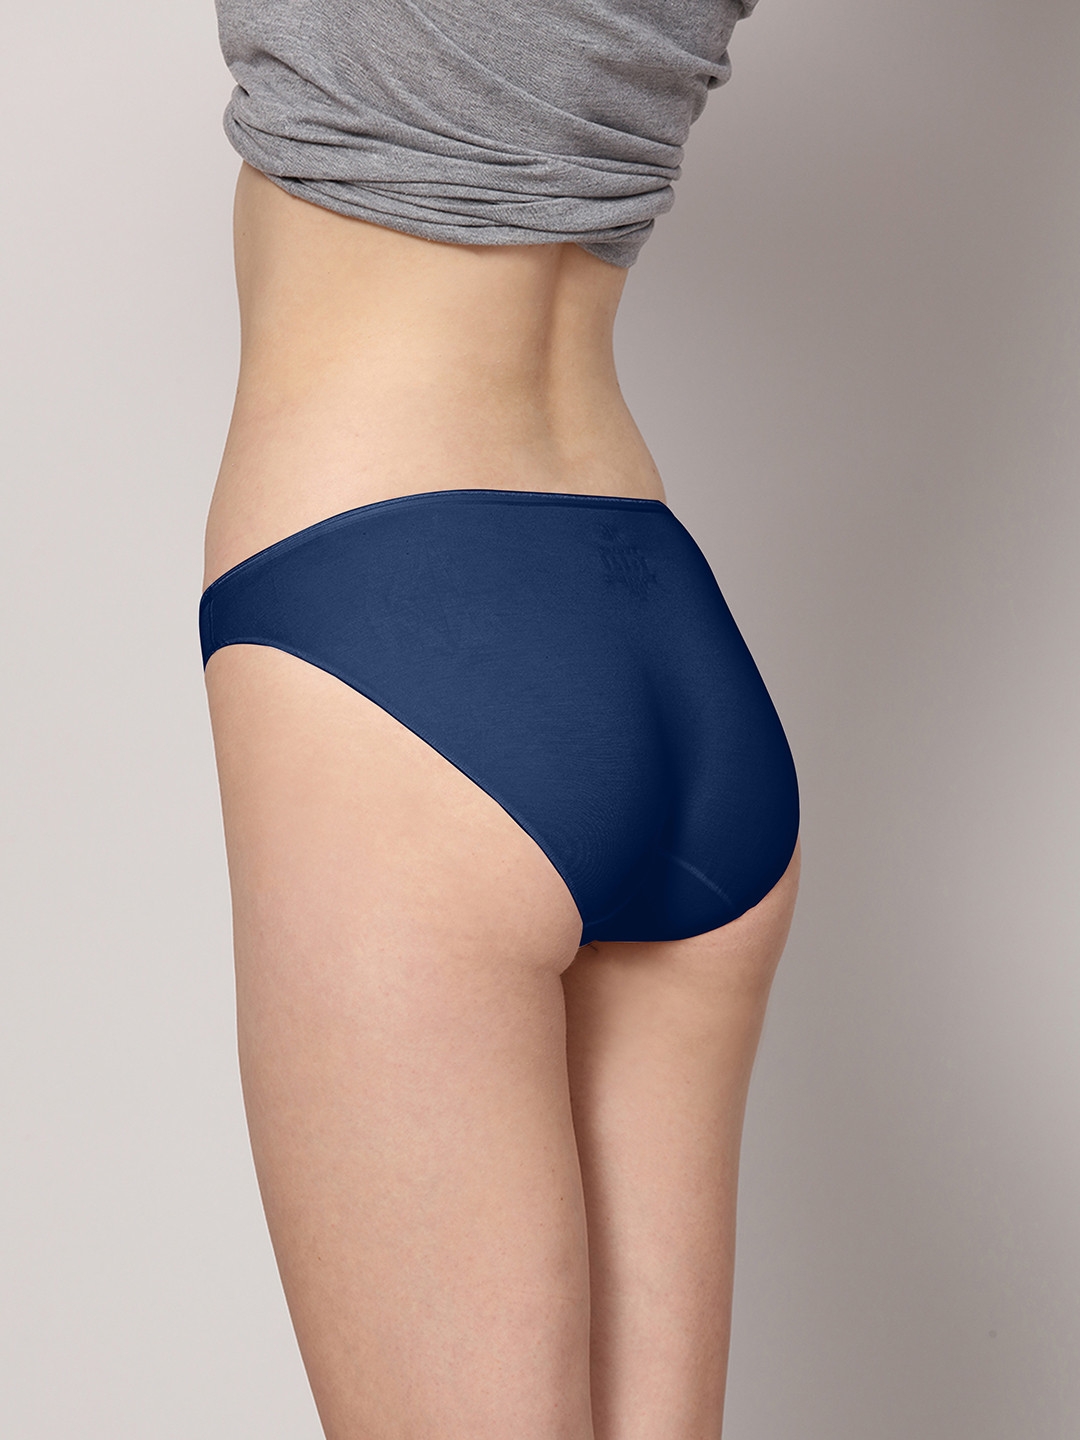 AshleyandAlvis | AshleyandAlvis Women's Panties Micro Modal, Anti Bacterial, Skinny Soft, Premium Bikini-No Itching, Sweat Proof, Double In-seam Gusset 3